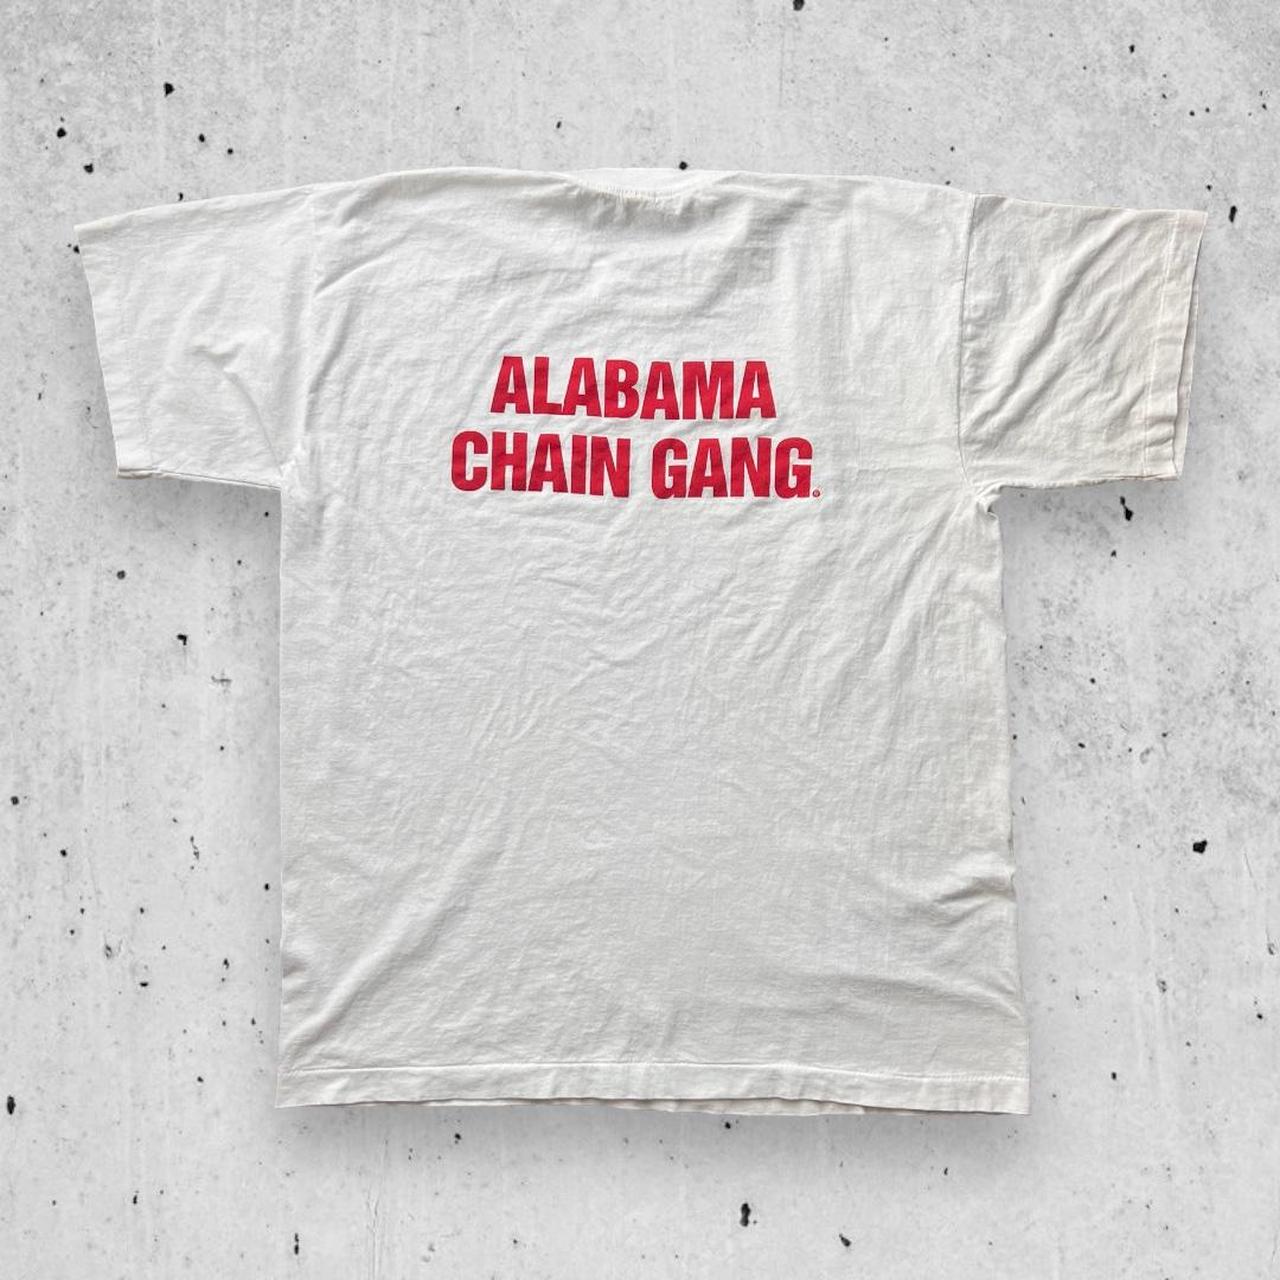 Vintage single stitch “Alabama Chain gang on a